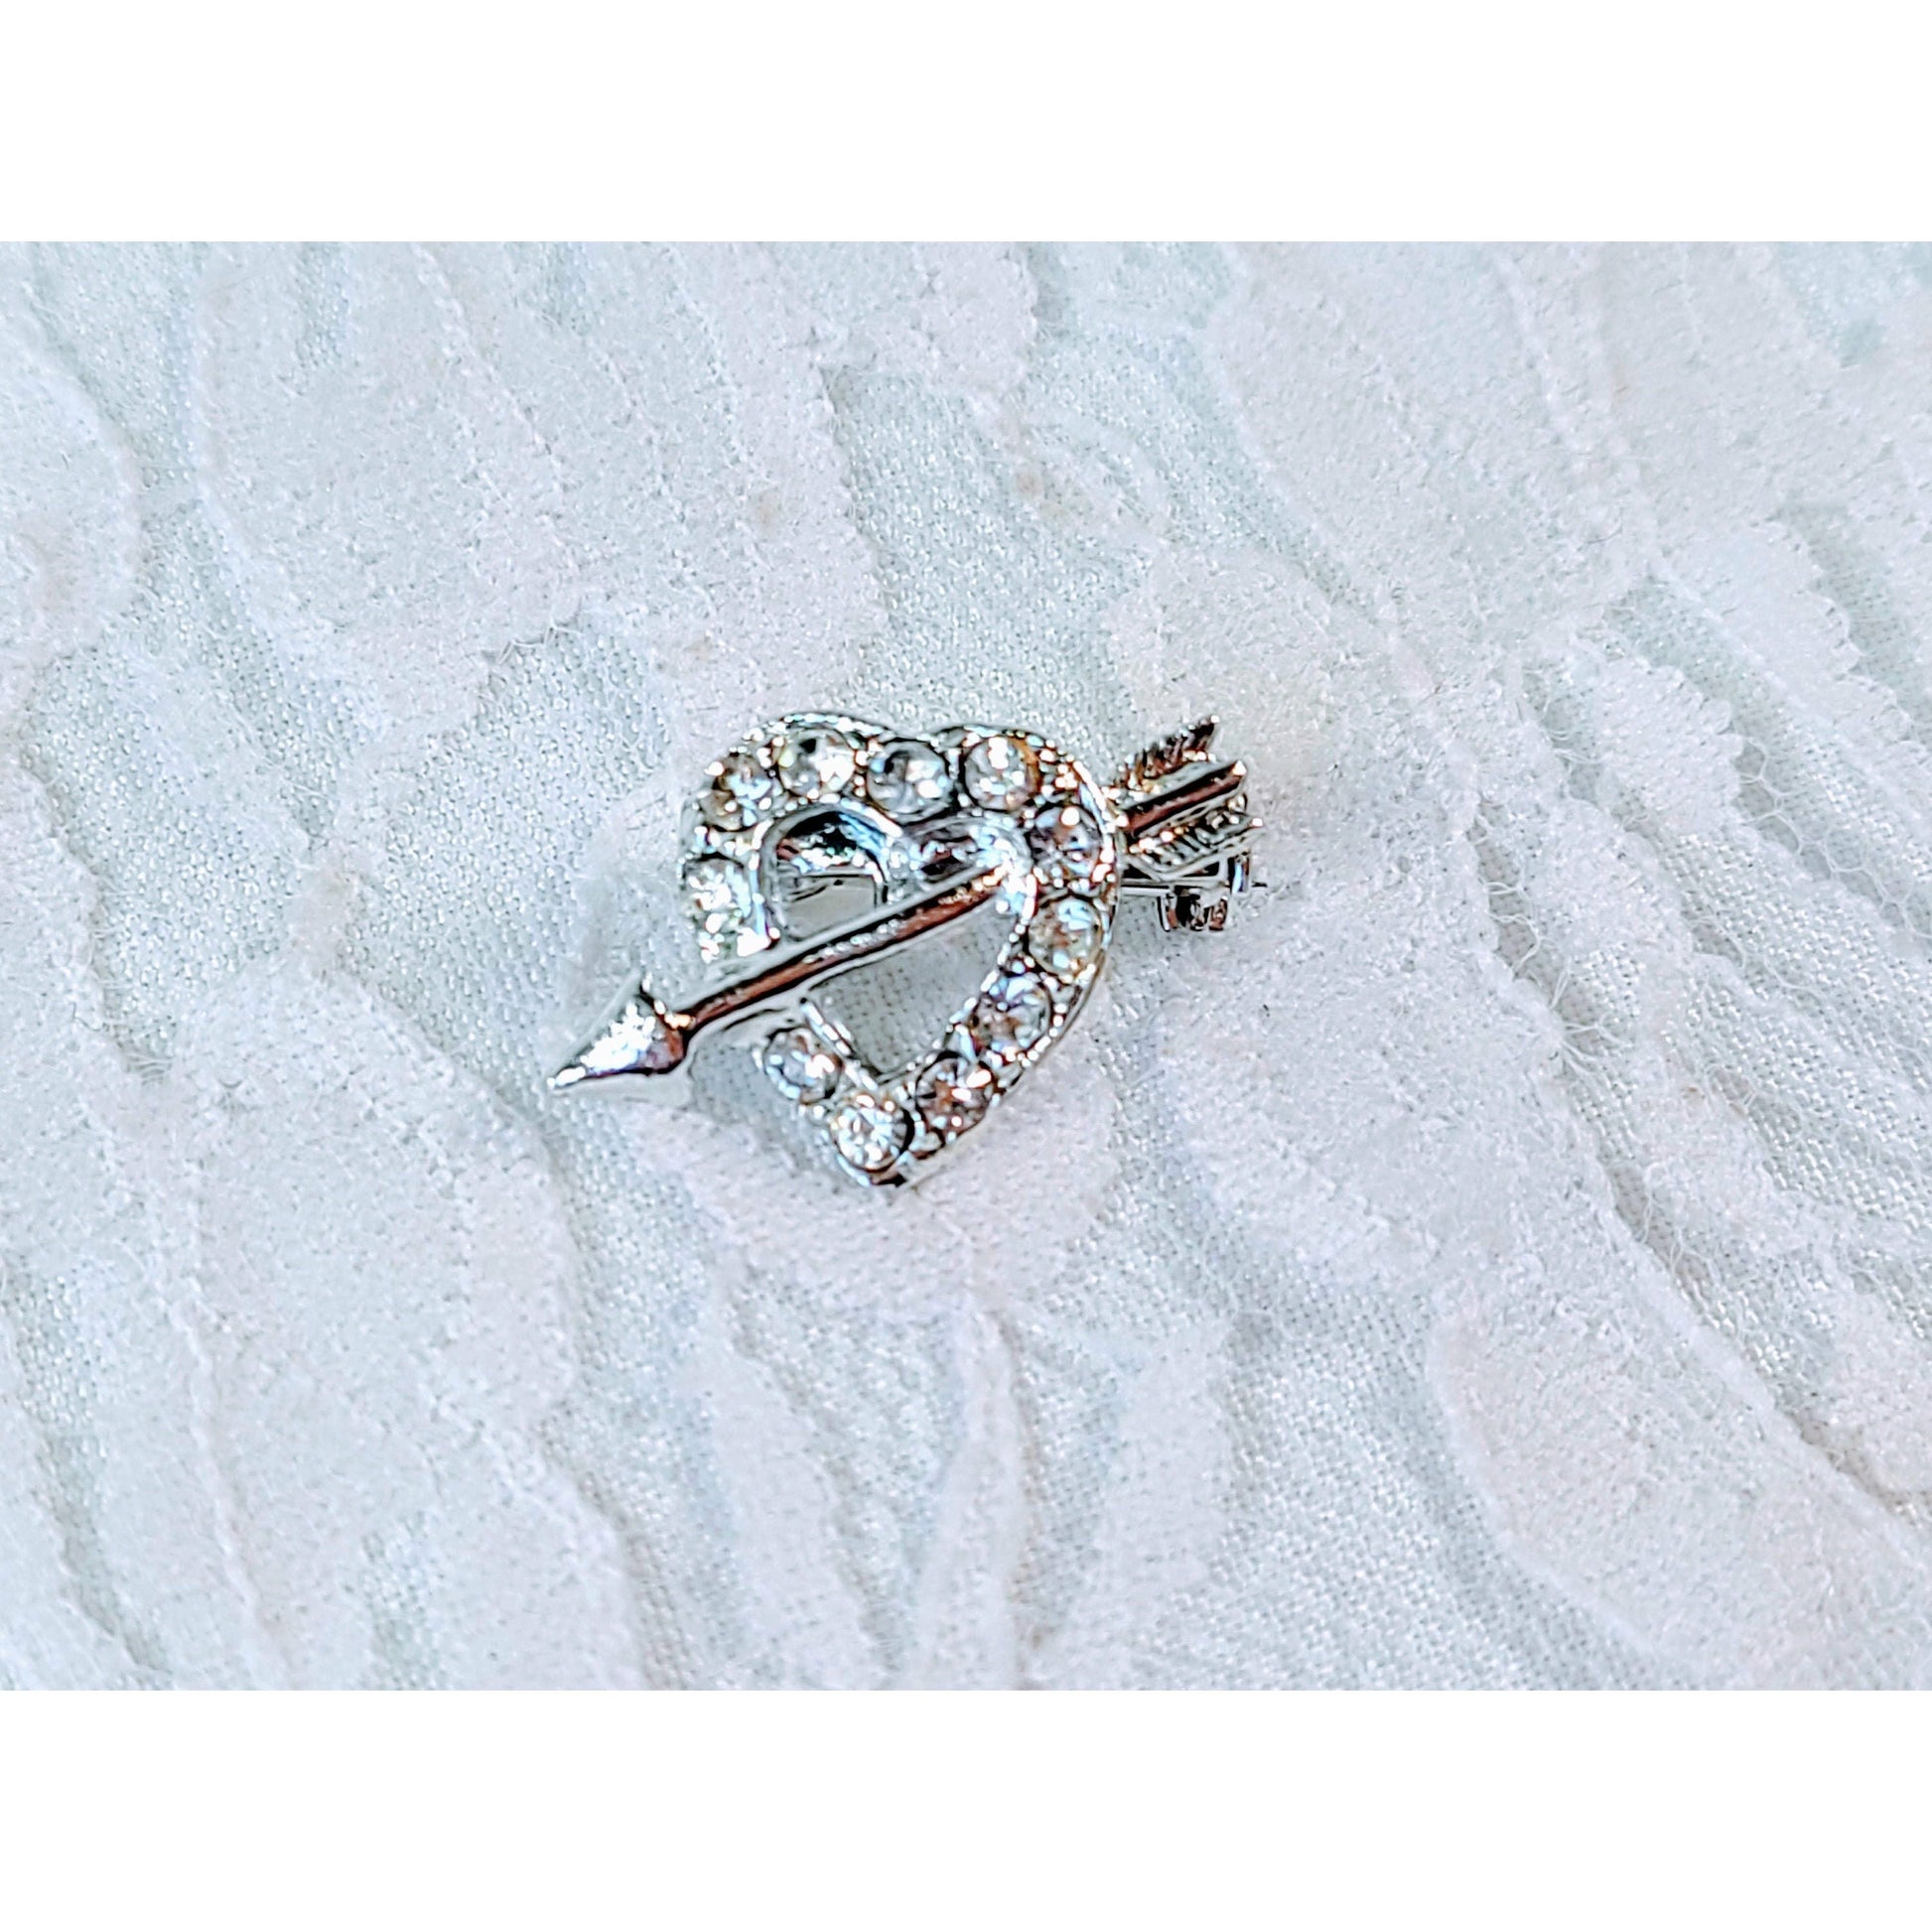 Antique Rhinestone Brooch 1950s Heart & Arrow Clear Cut Glass ~ Silver Paste Brooch ~ Vintage Rhinestone Pin